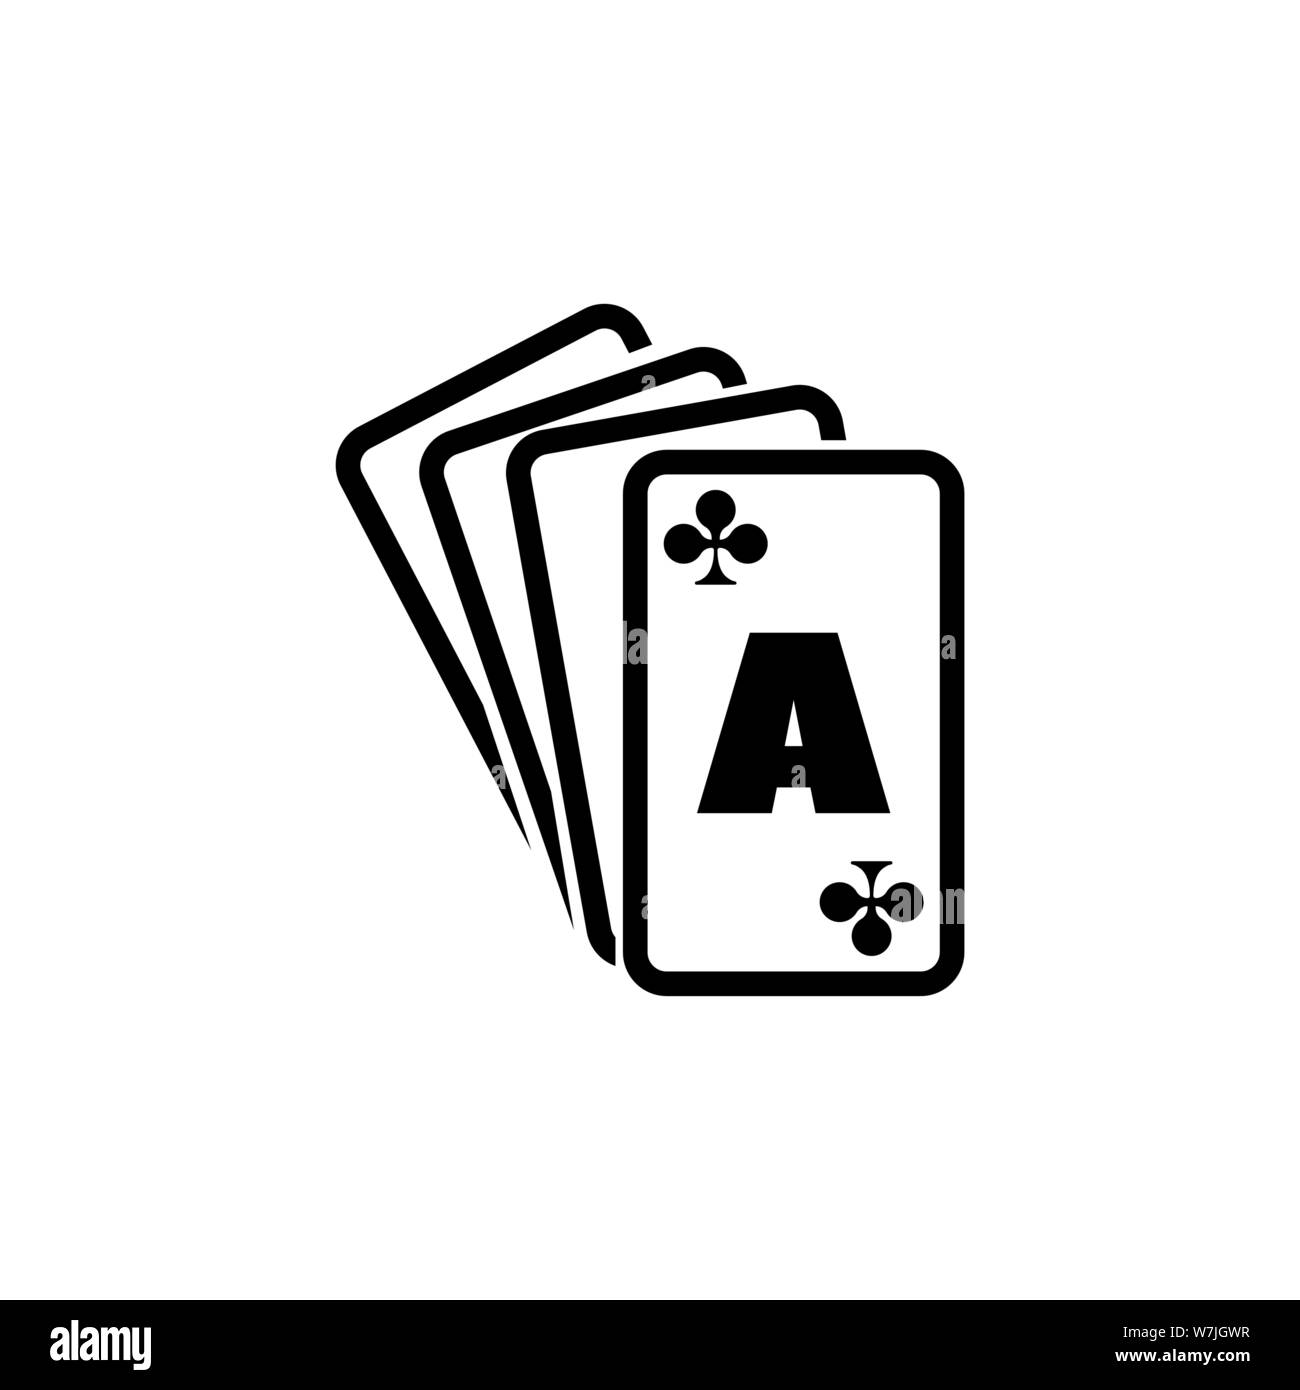 Cartas de poker y fondo negro Stock Illustration